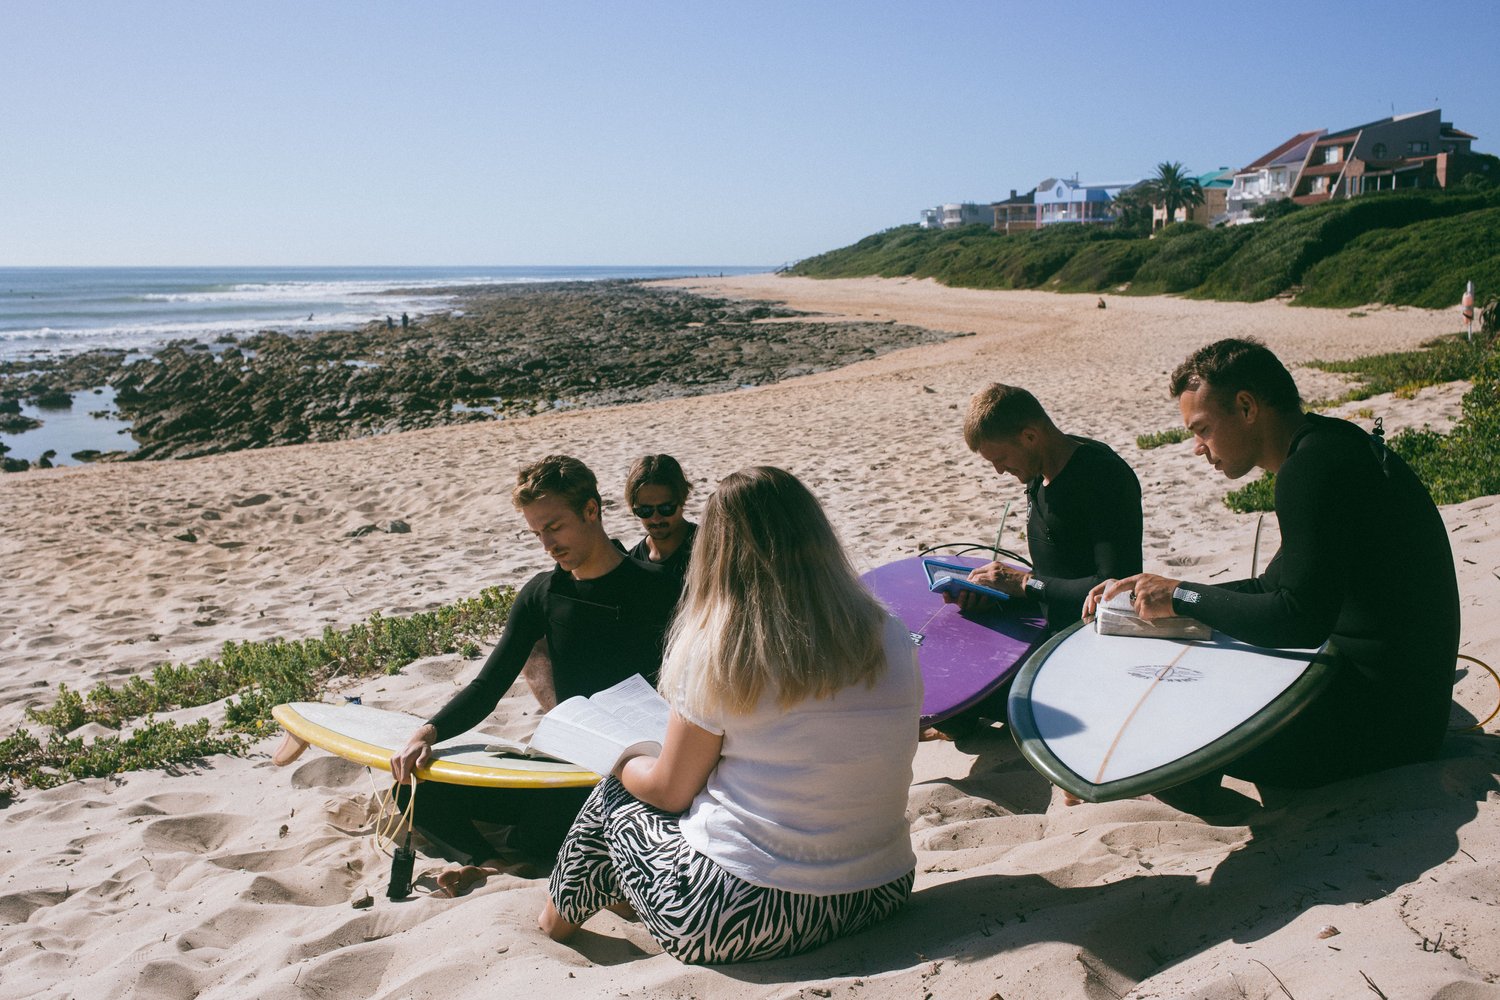 International Online Gathering — Christian Surfers